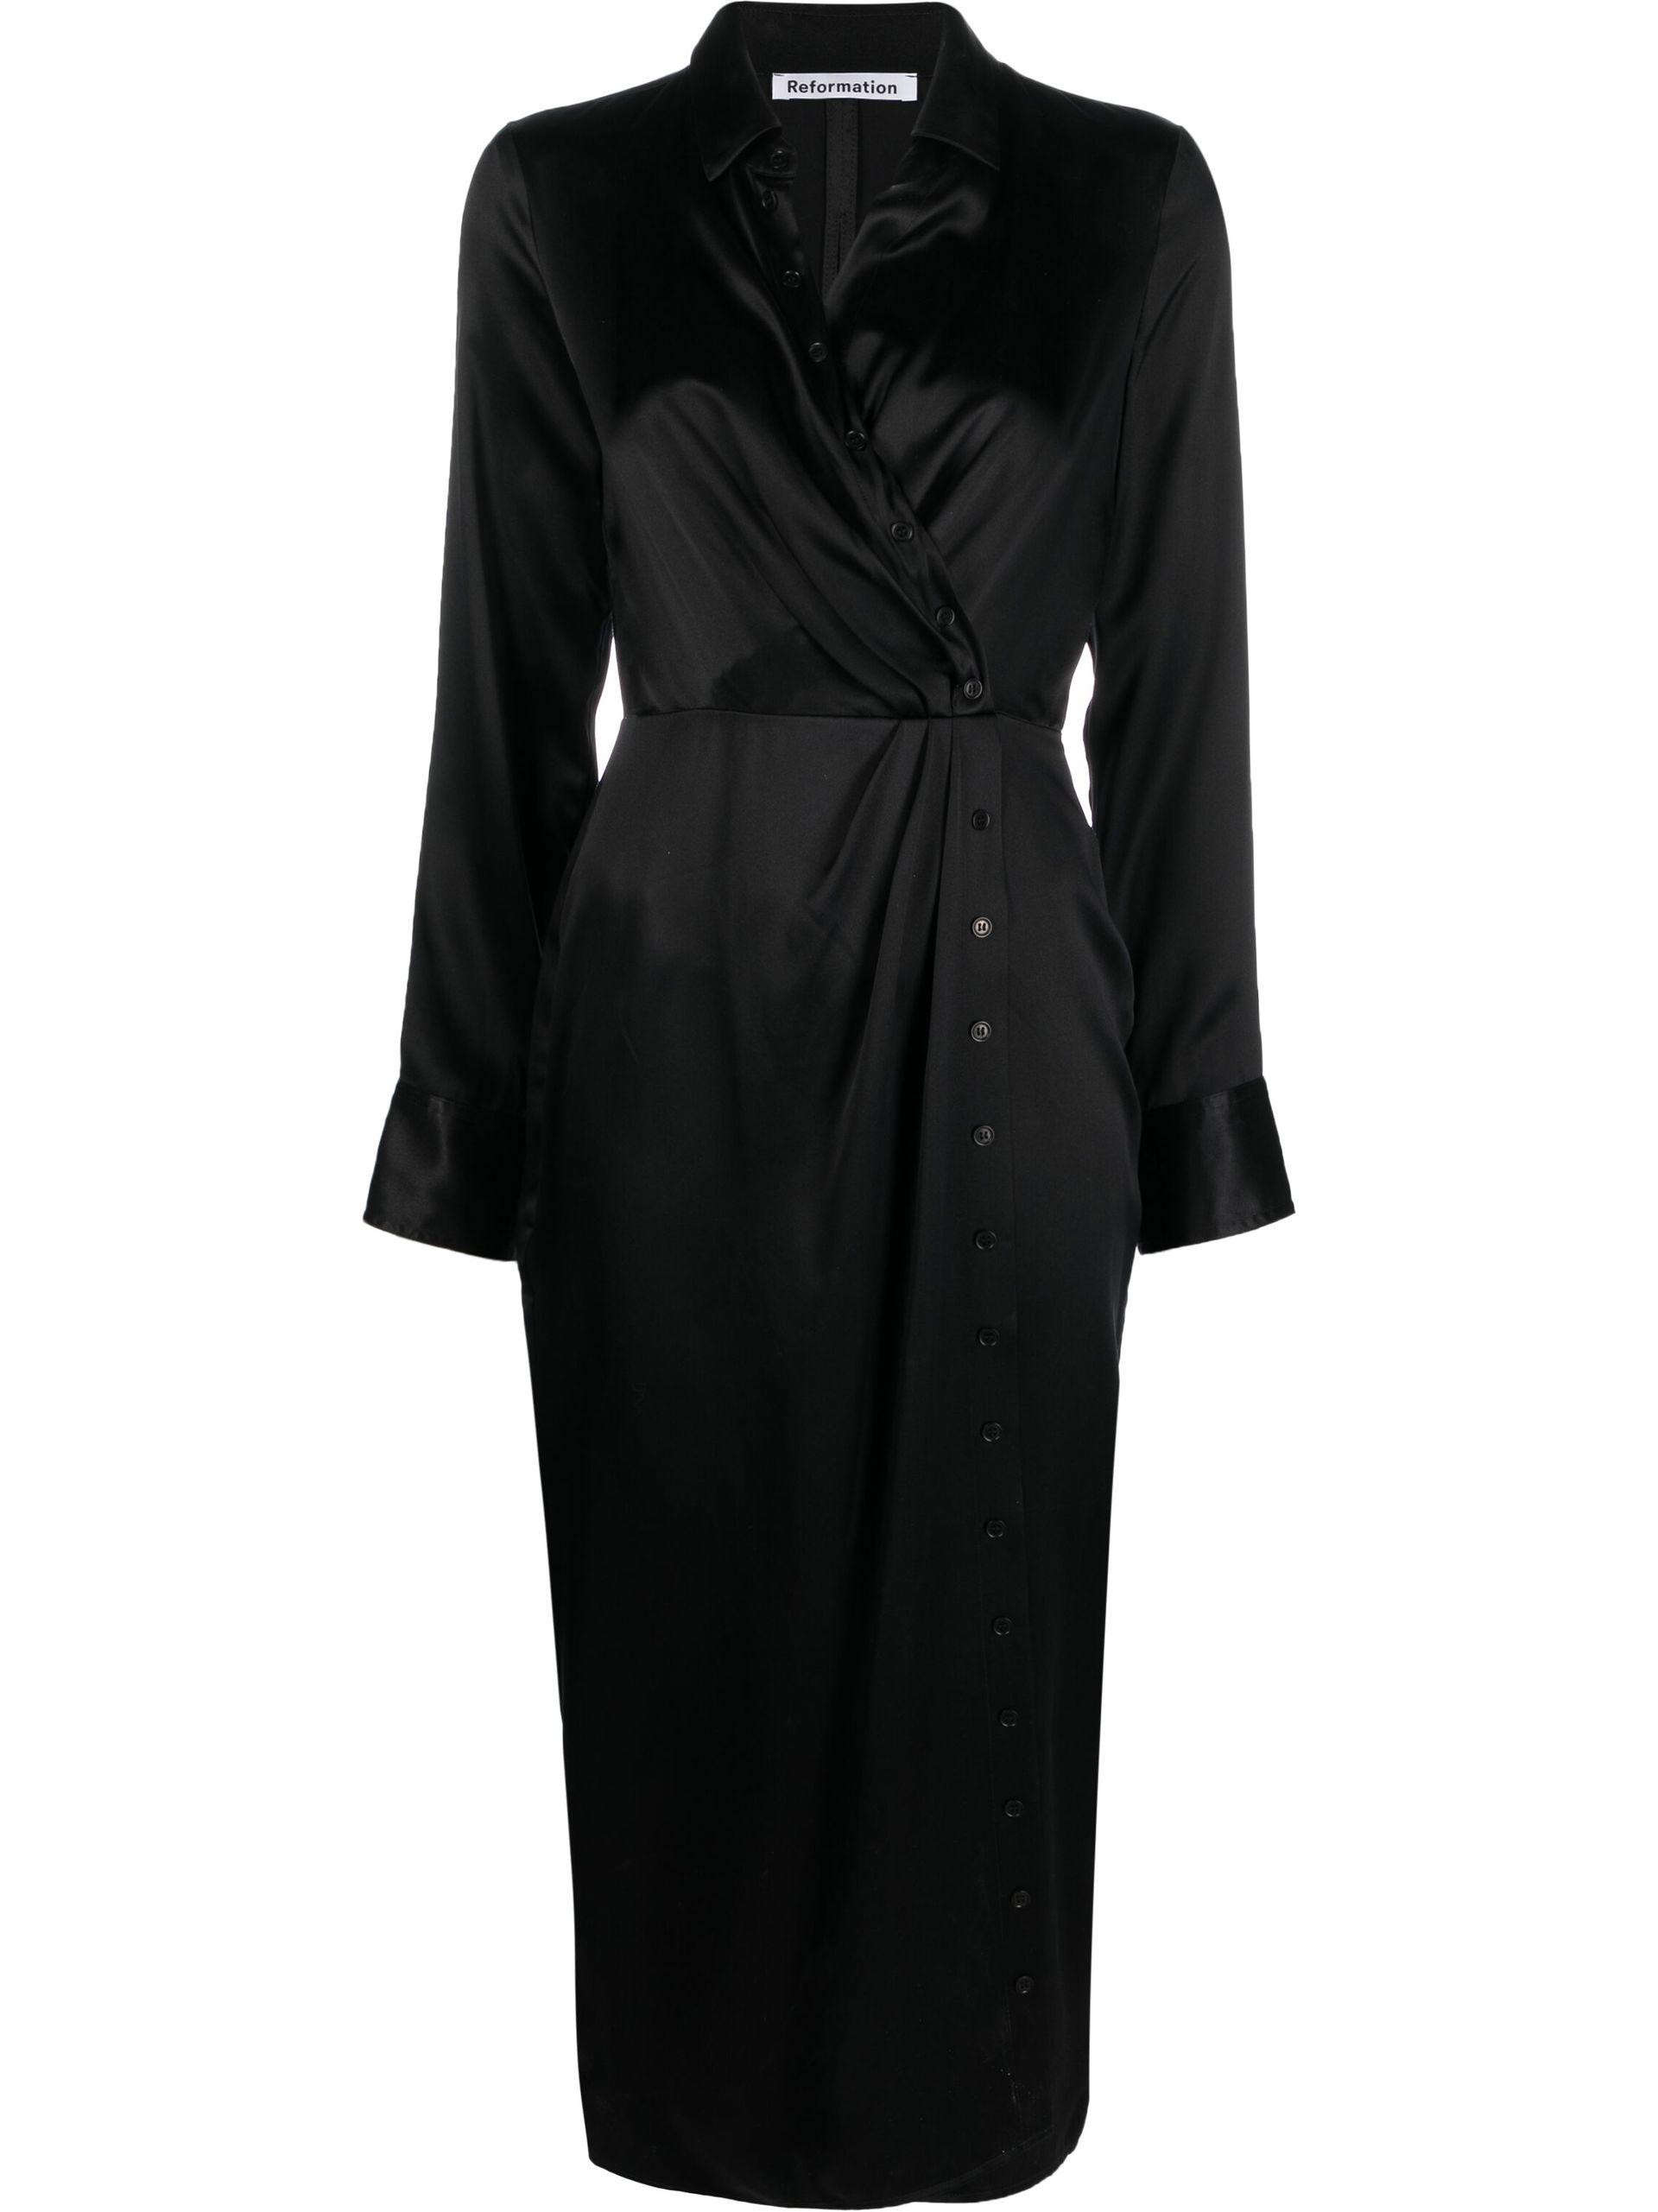 Reformation Lyon Silk Shirt Dress in Black | Lyst